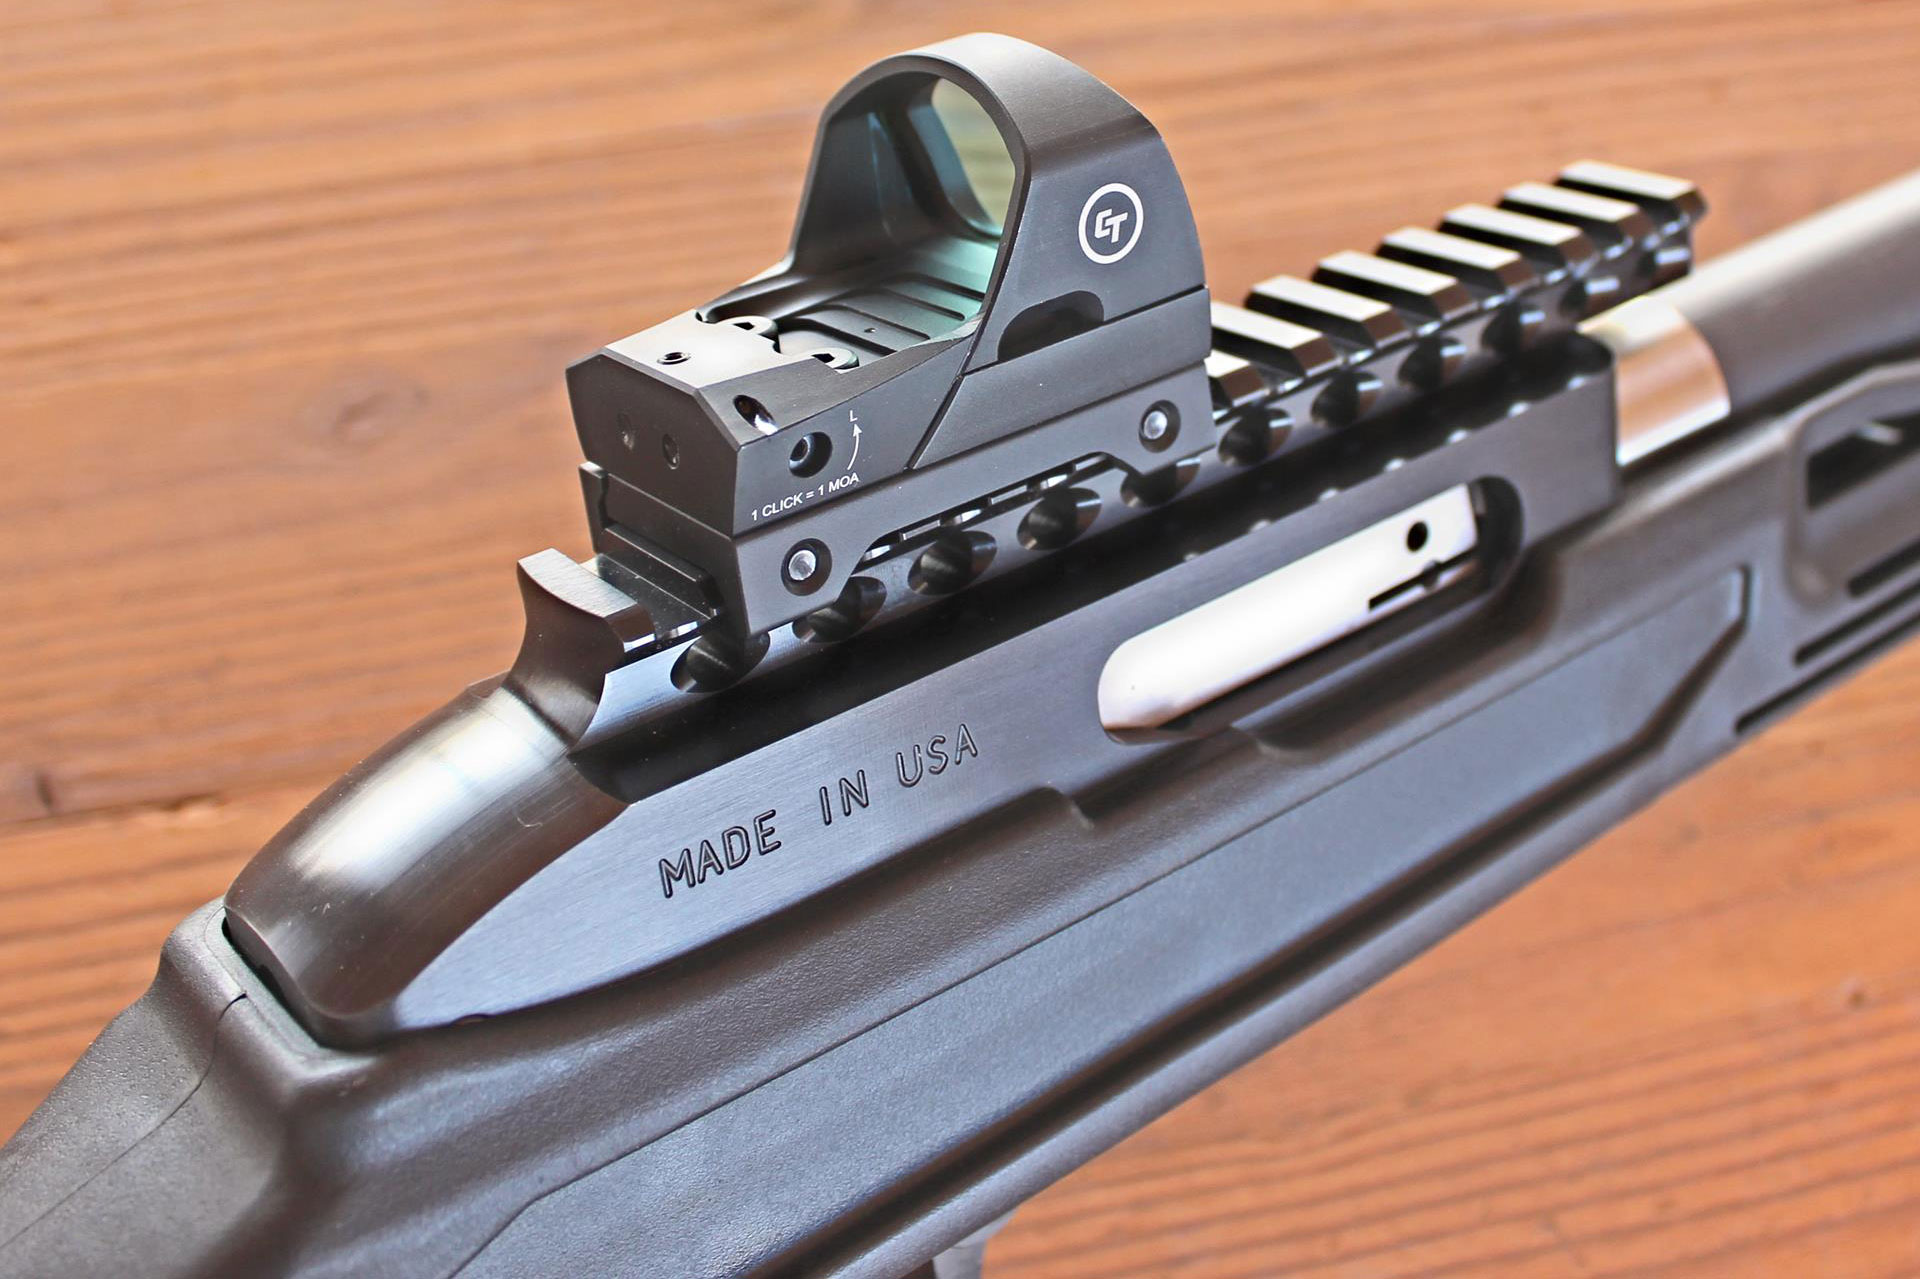 Look cross focal viewer peep sight for rifle shotgun tactical 4-14x44sf laser eye 